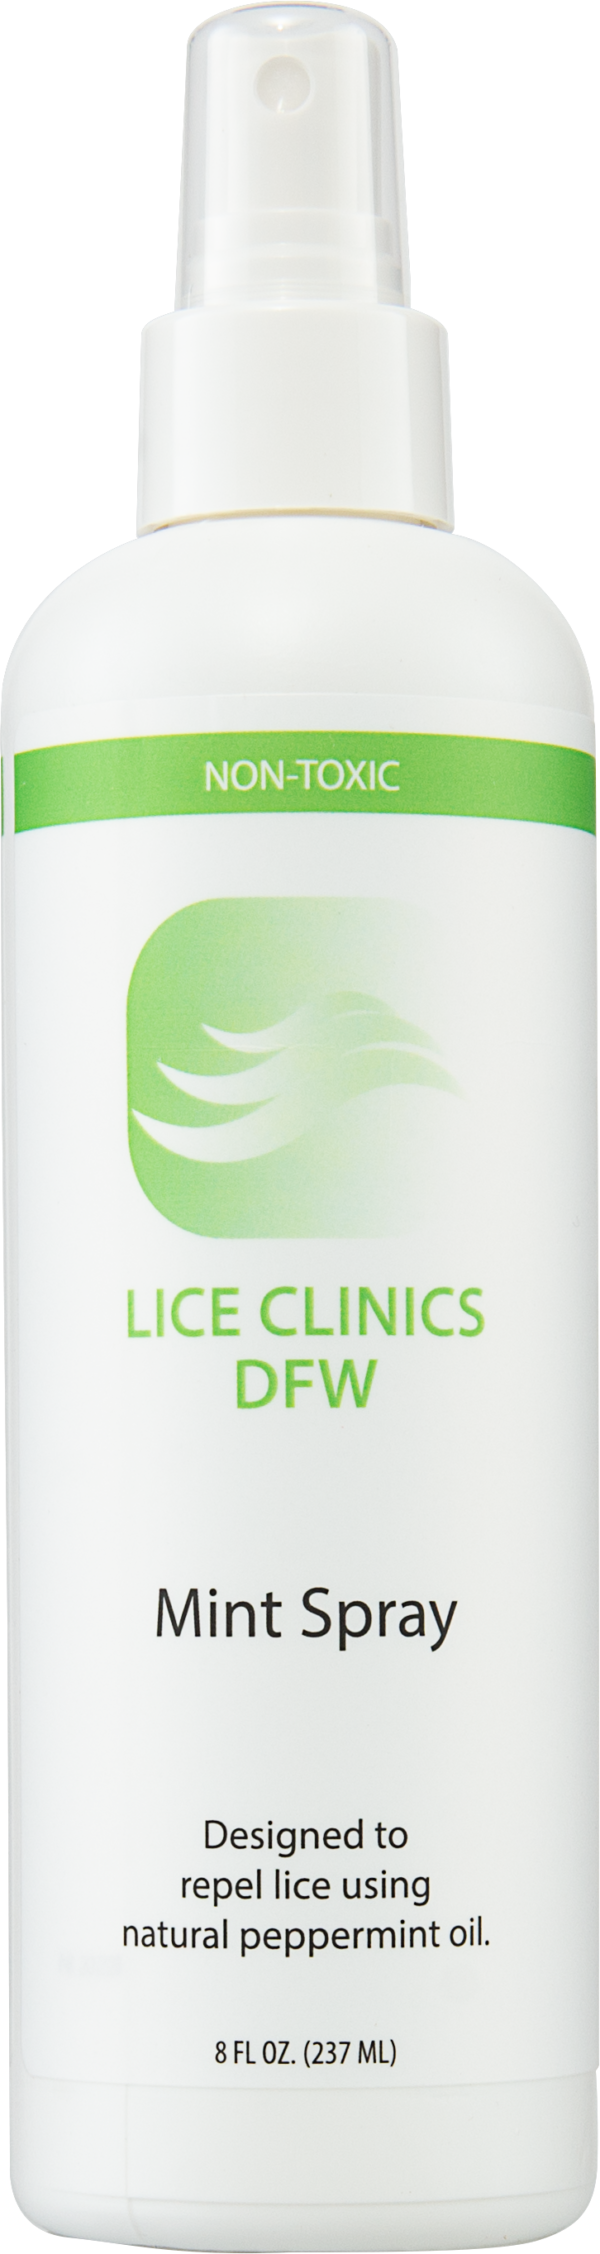 Lice Clinic Prevention Mint spray